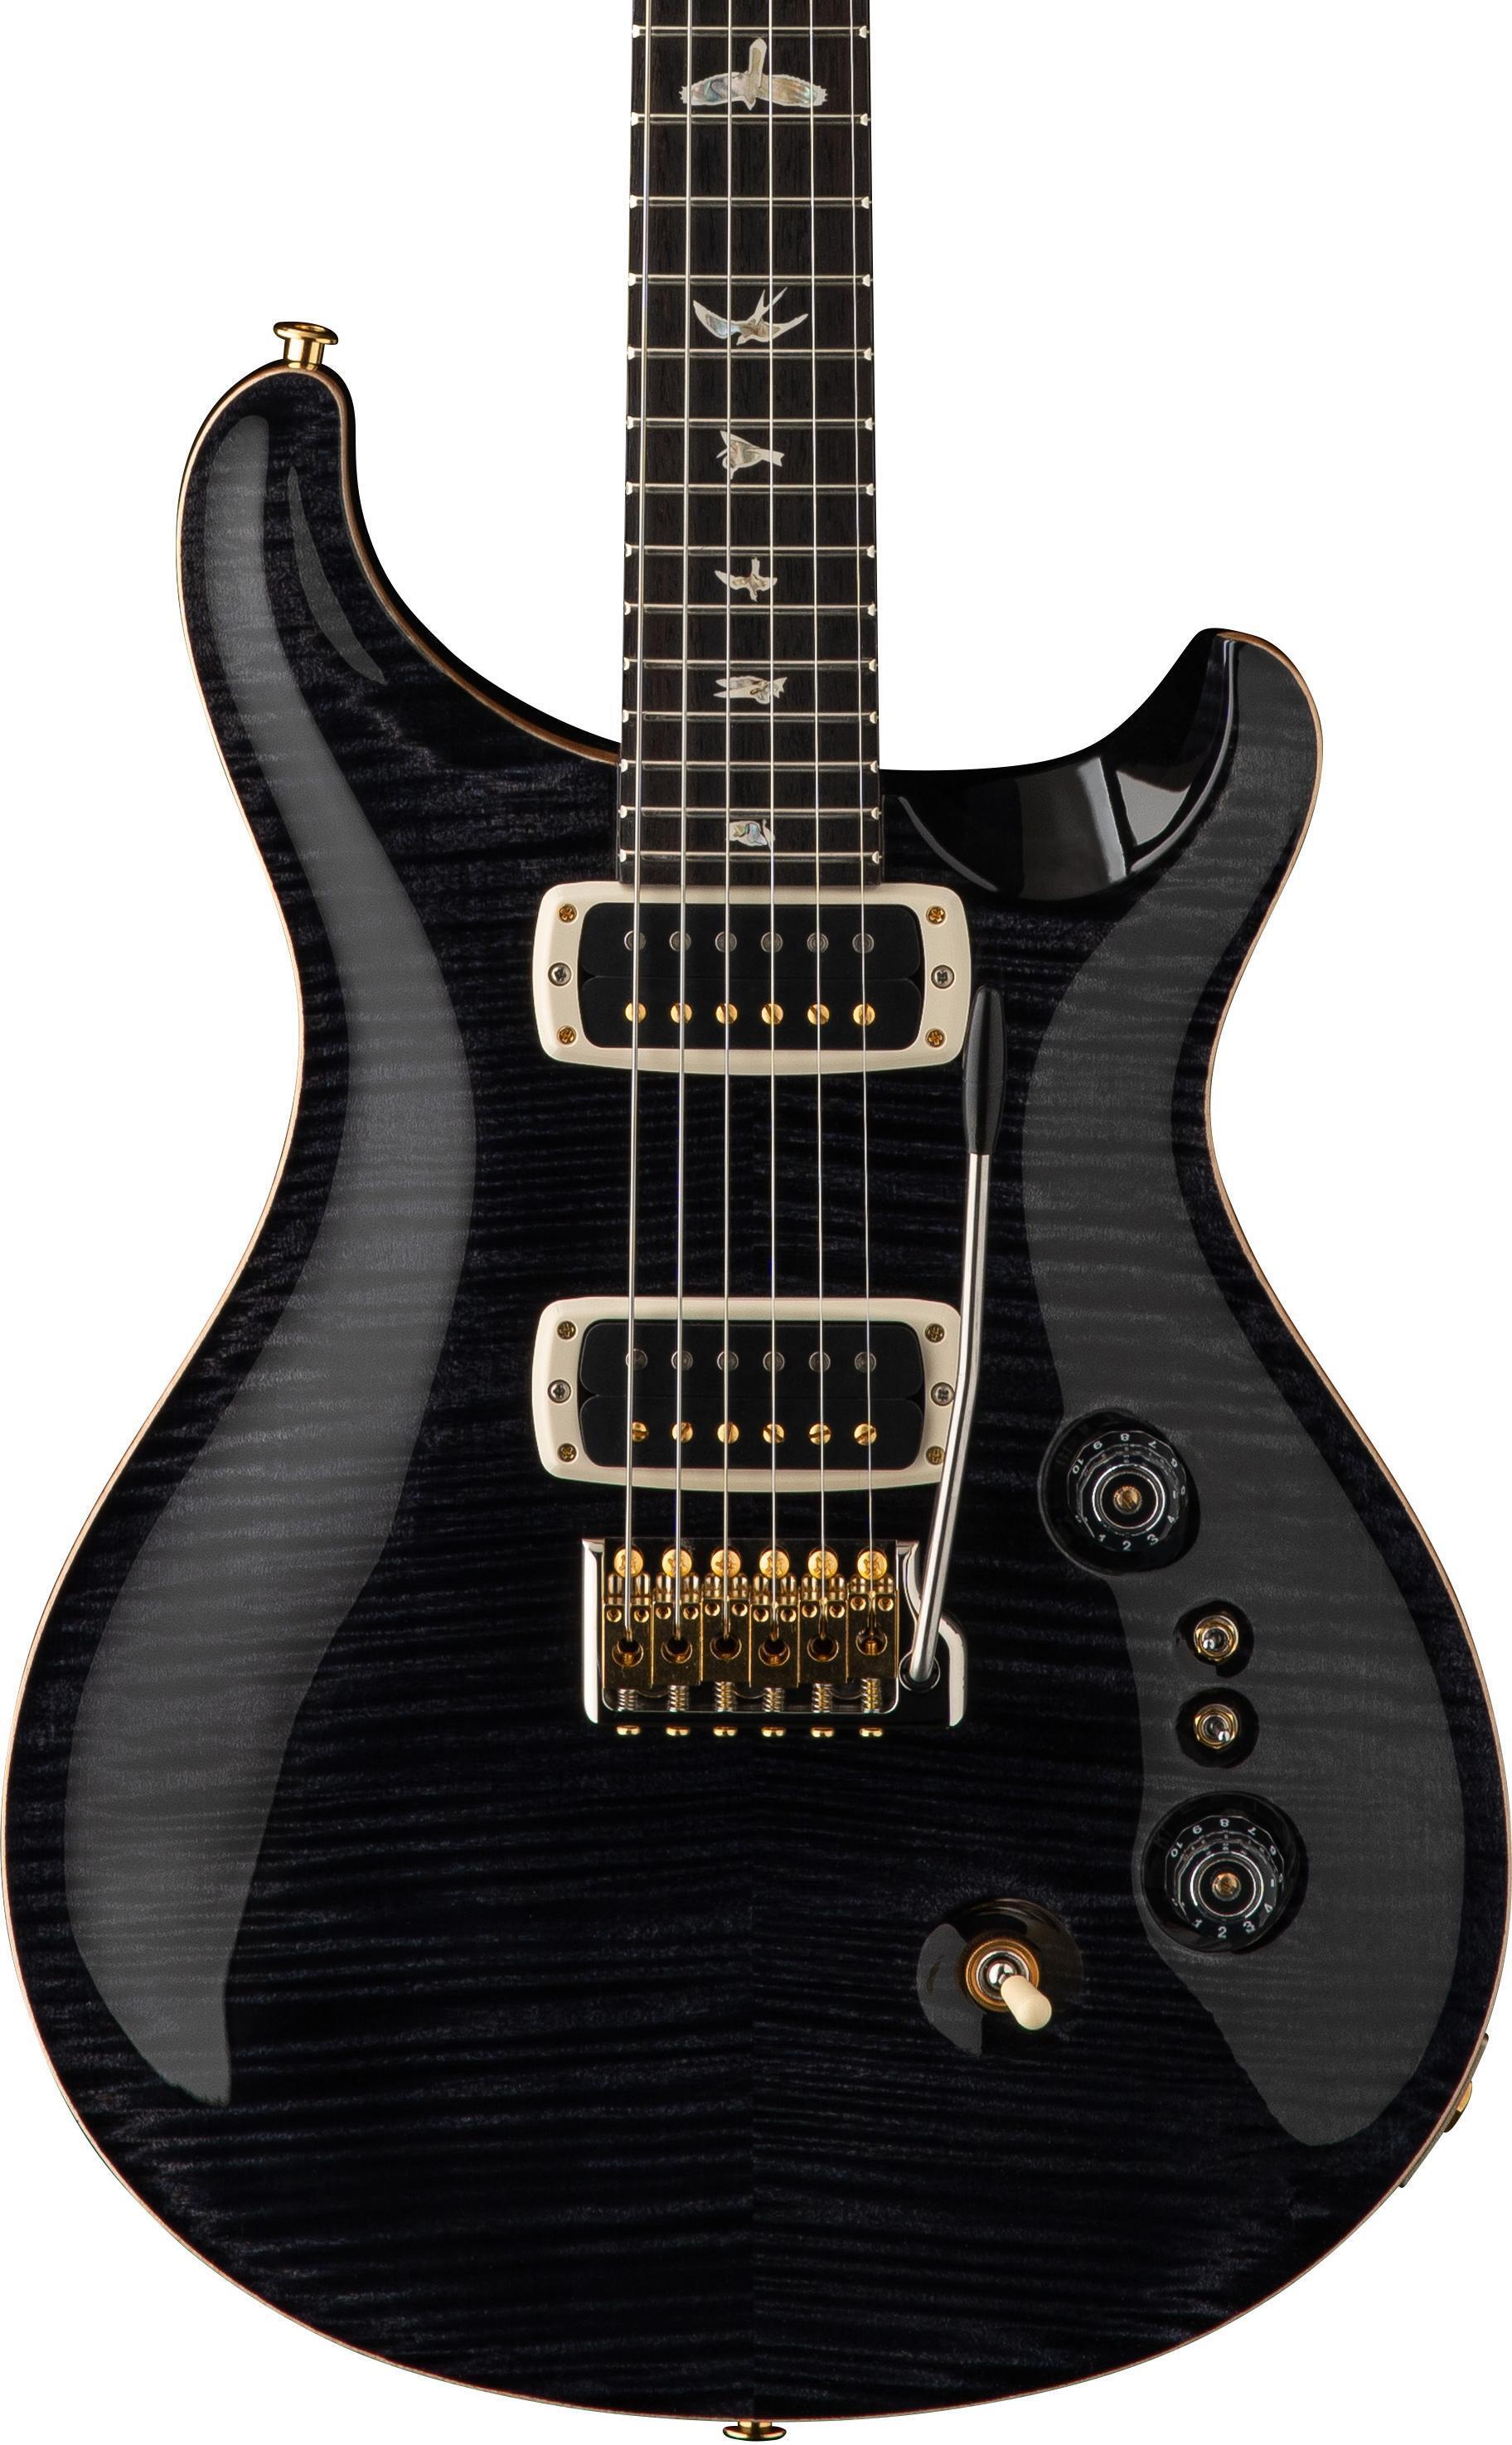 New PRS Custom 24-08 10-Top Electric Guitar - Gray Black/Black